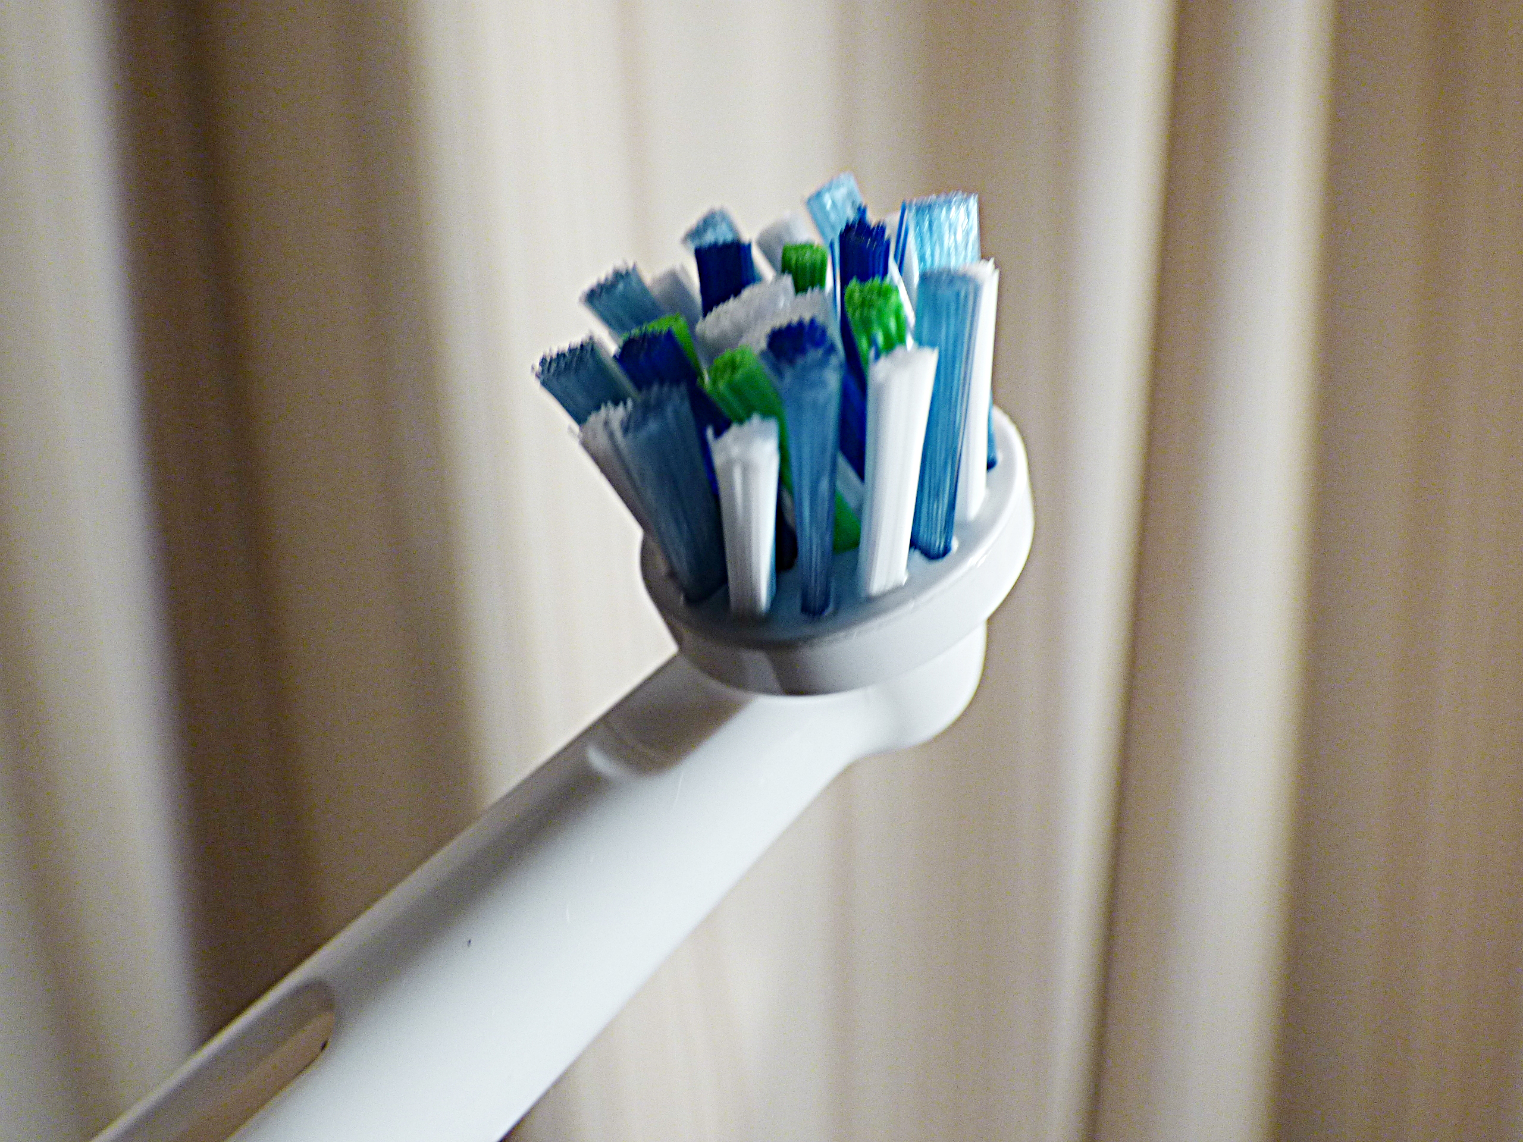 chez-maximka-oral-b-pro-2500-electric-toothbrush